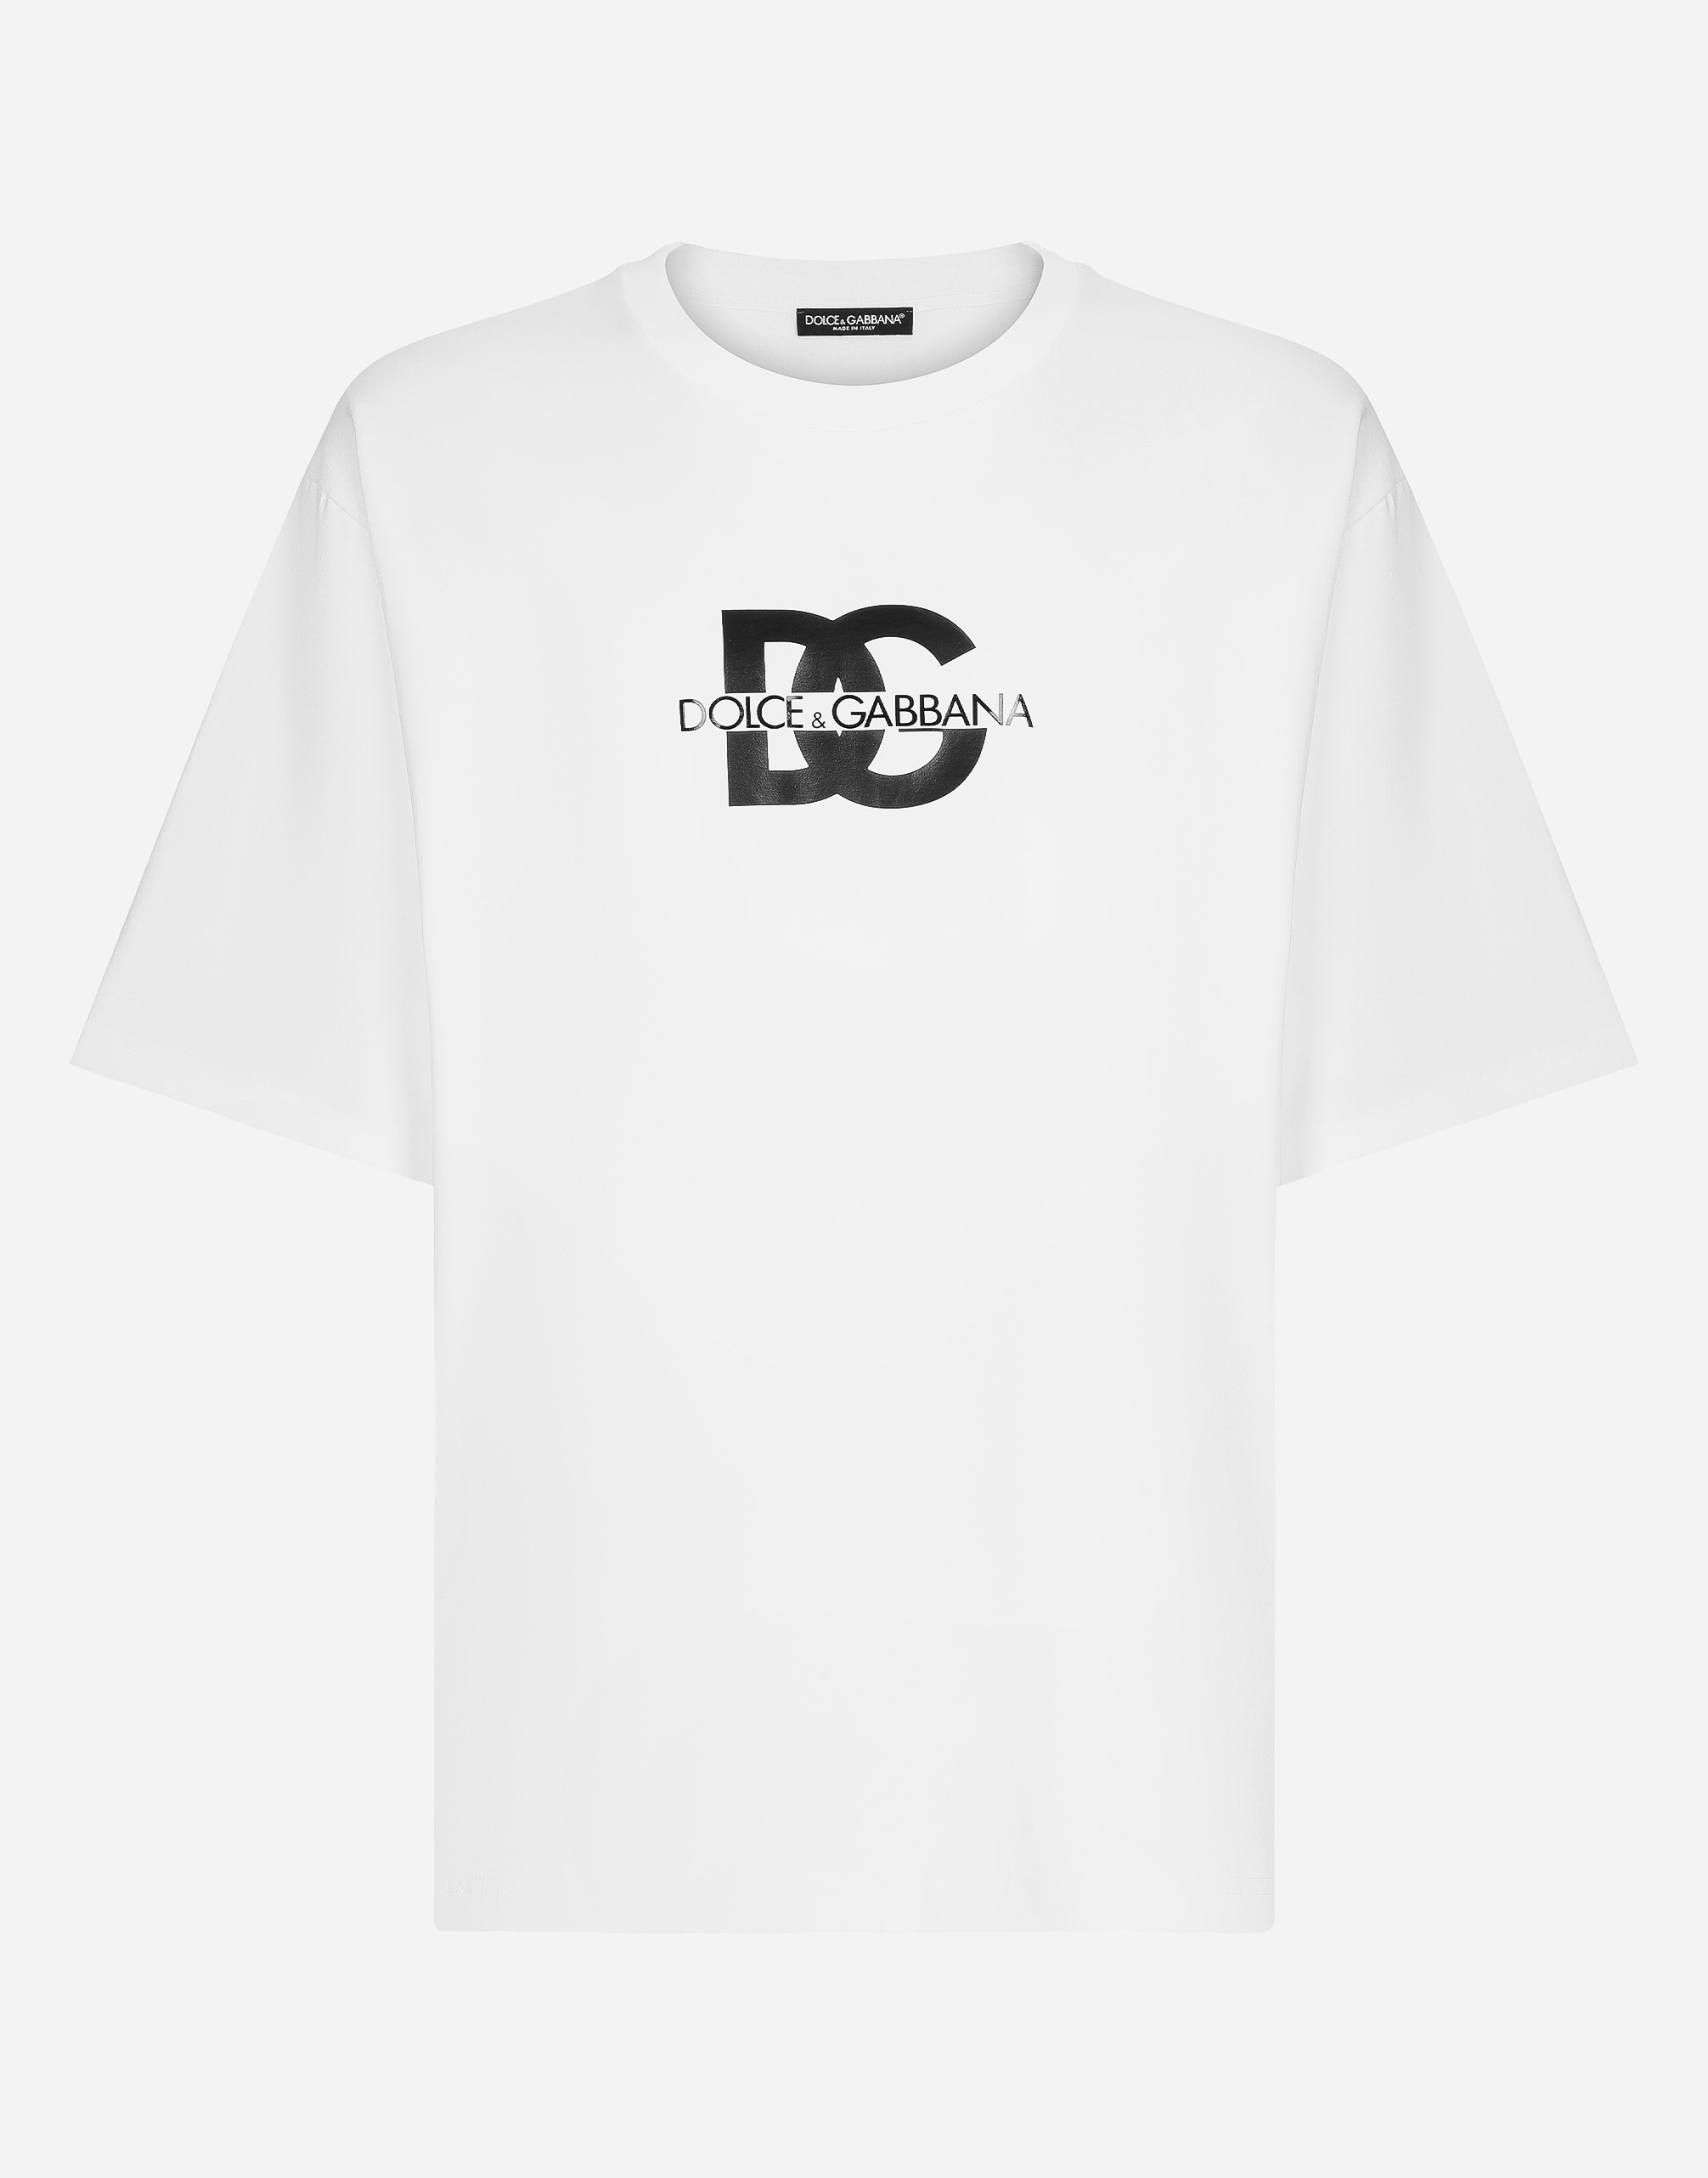 Dolce & Gabbana Short-sleeved T-shirt With Dg Logo Print In White